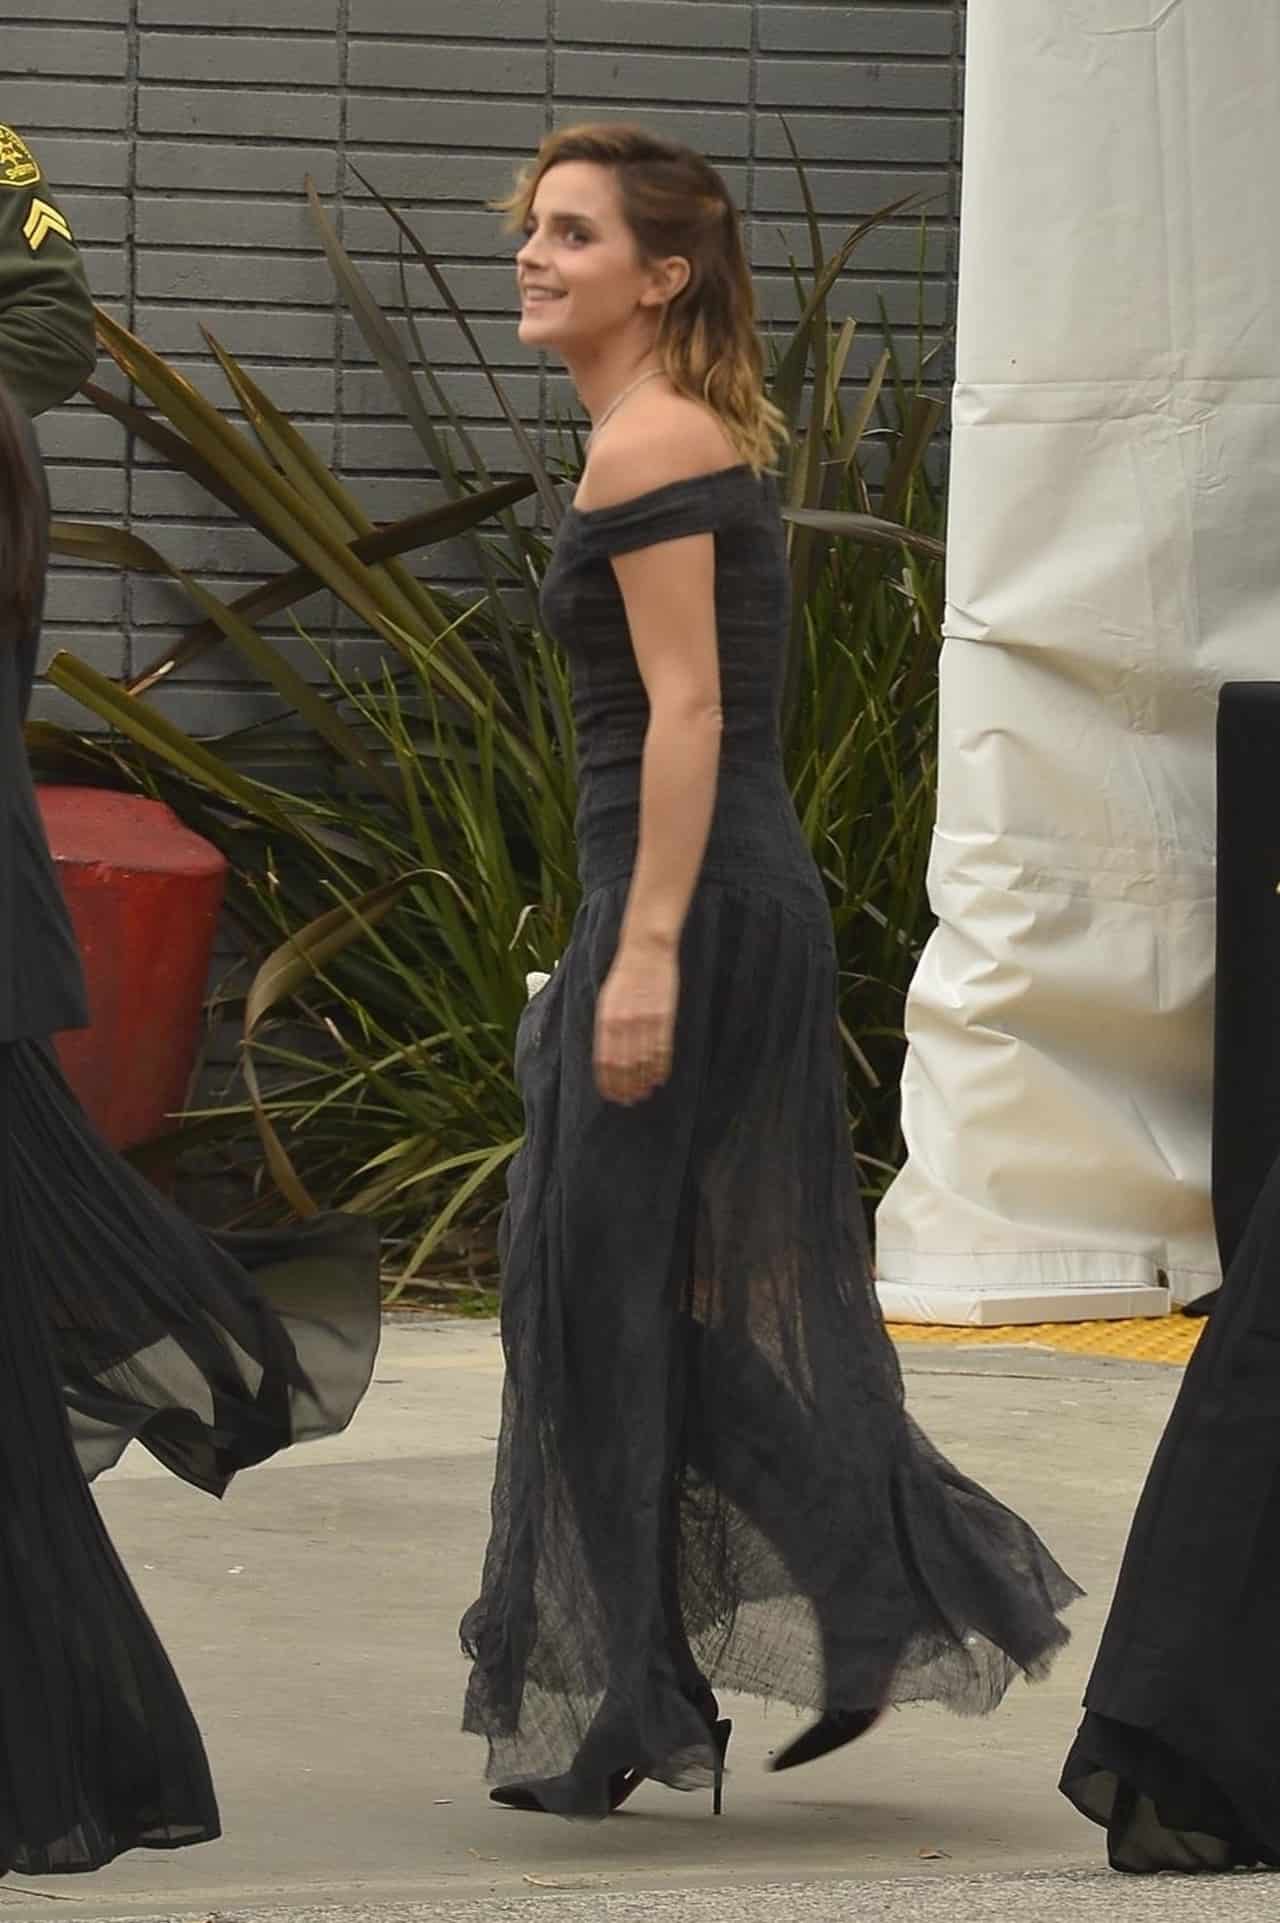 Emma Watson Looks Ethereal in a Sheer Dress Outside the Four Seasons Hotel